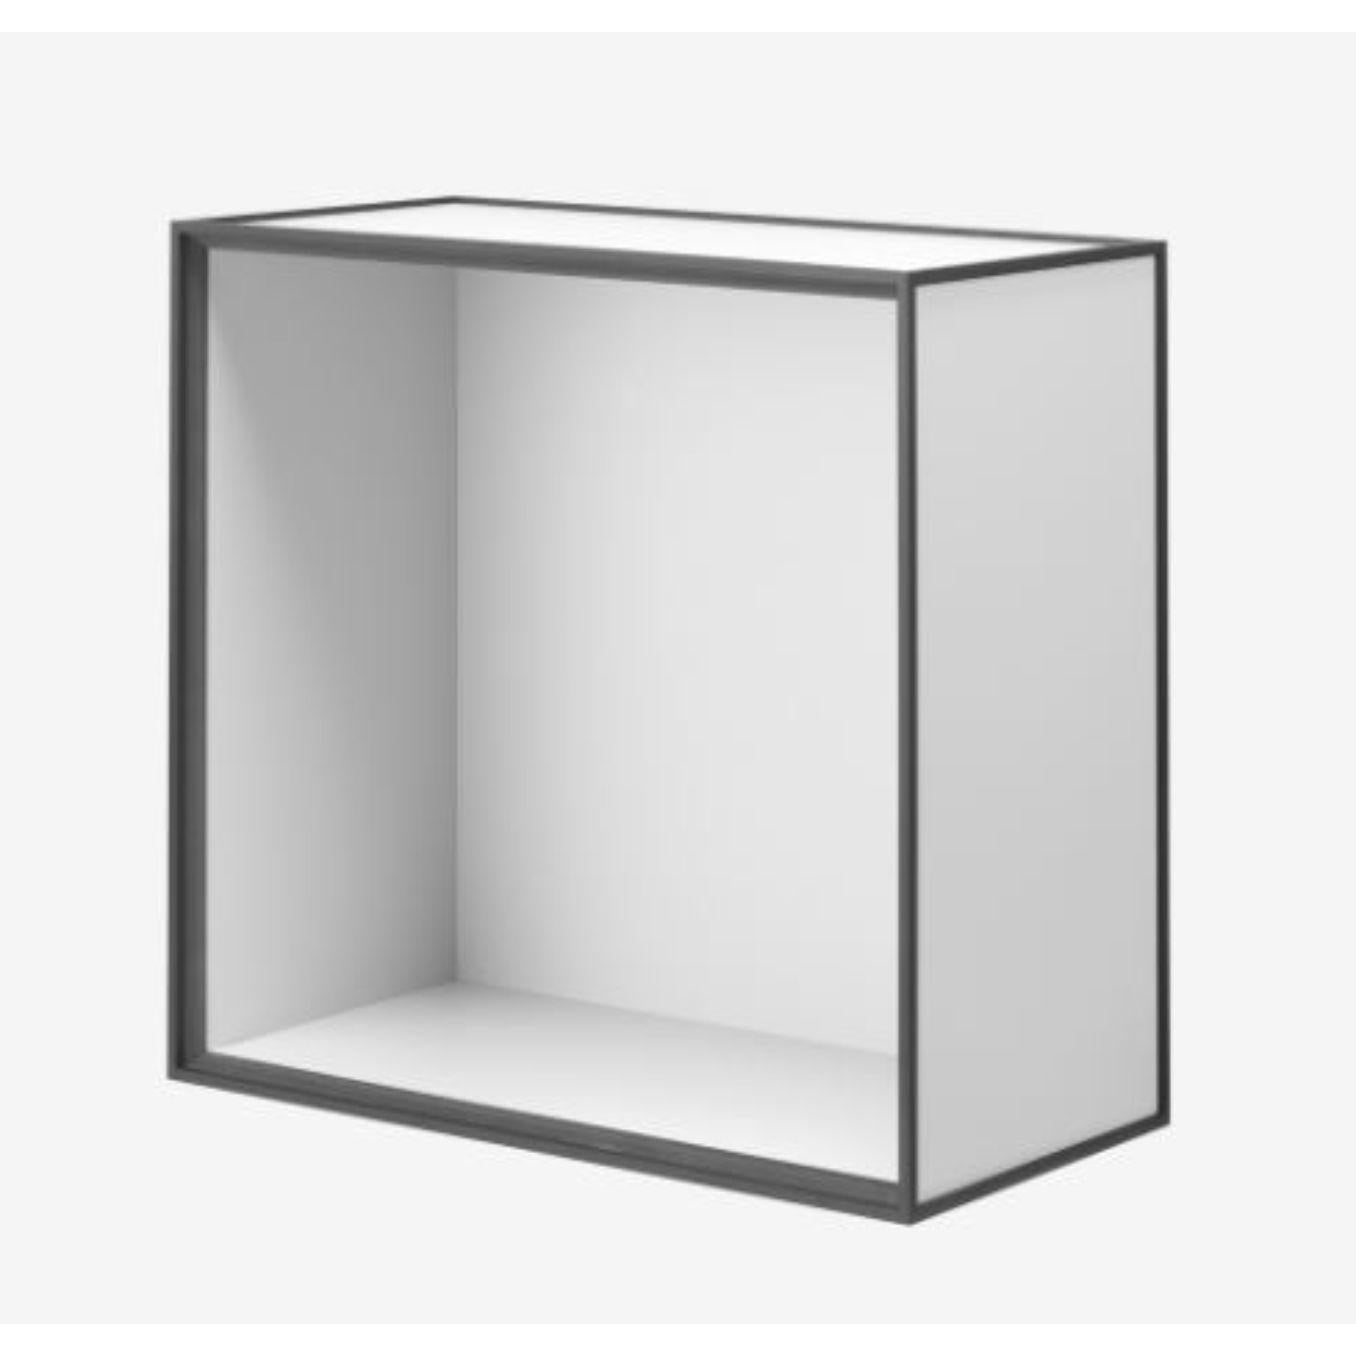 Danish 42 Fjord Frame Box by Lassen For Sale